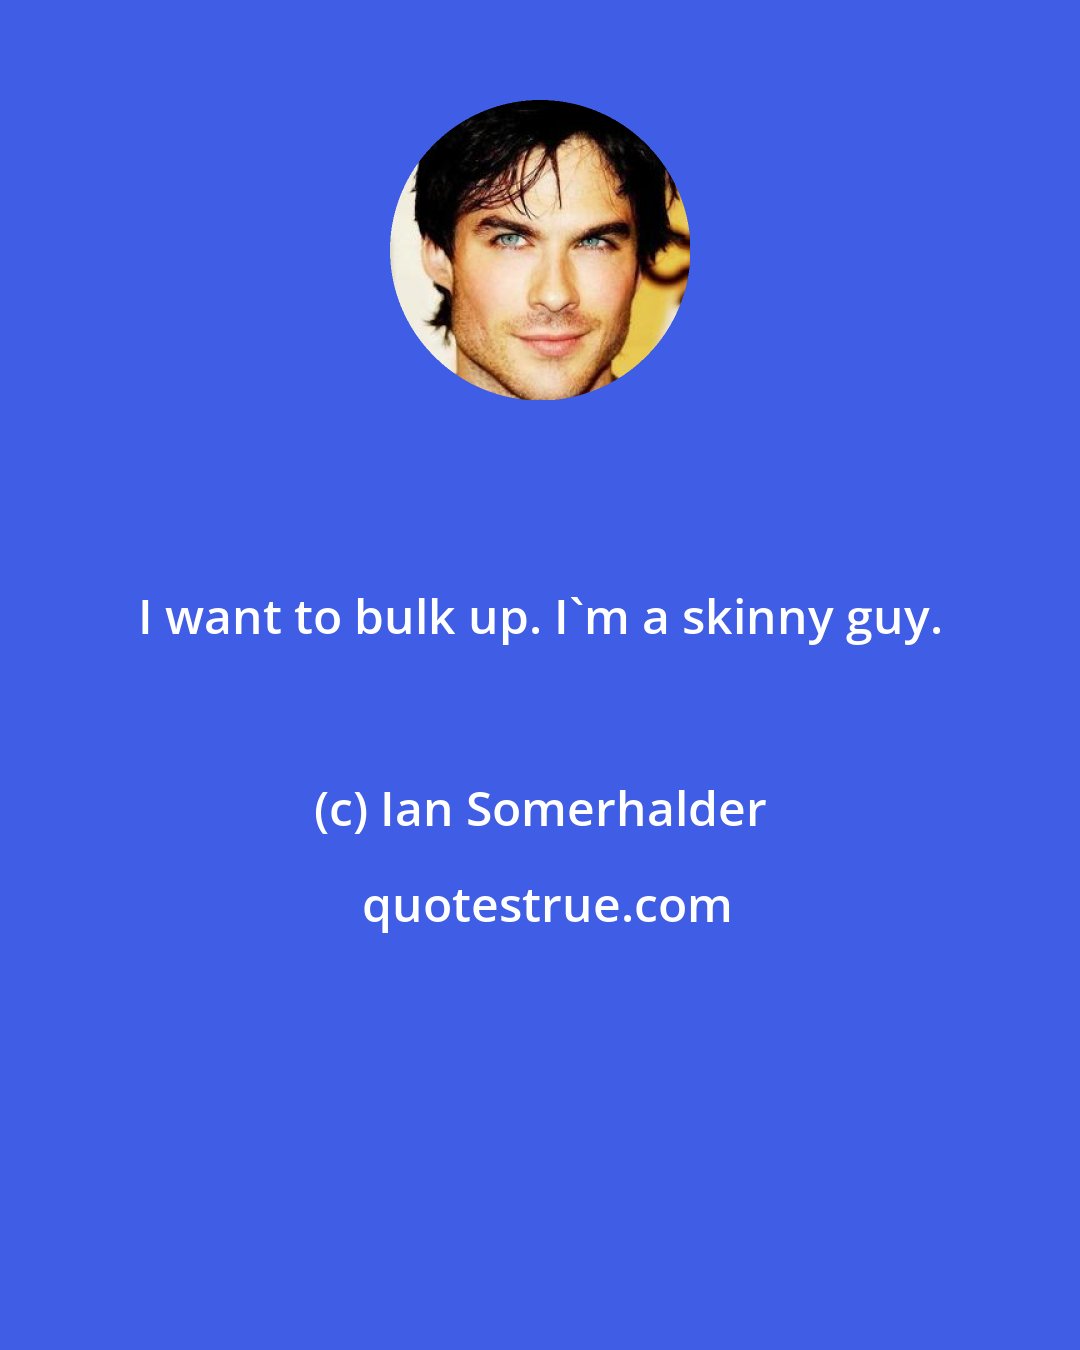 Ian Somerhalder: I want to bulk up. I'm a skinny guy.